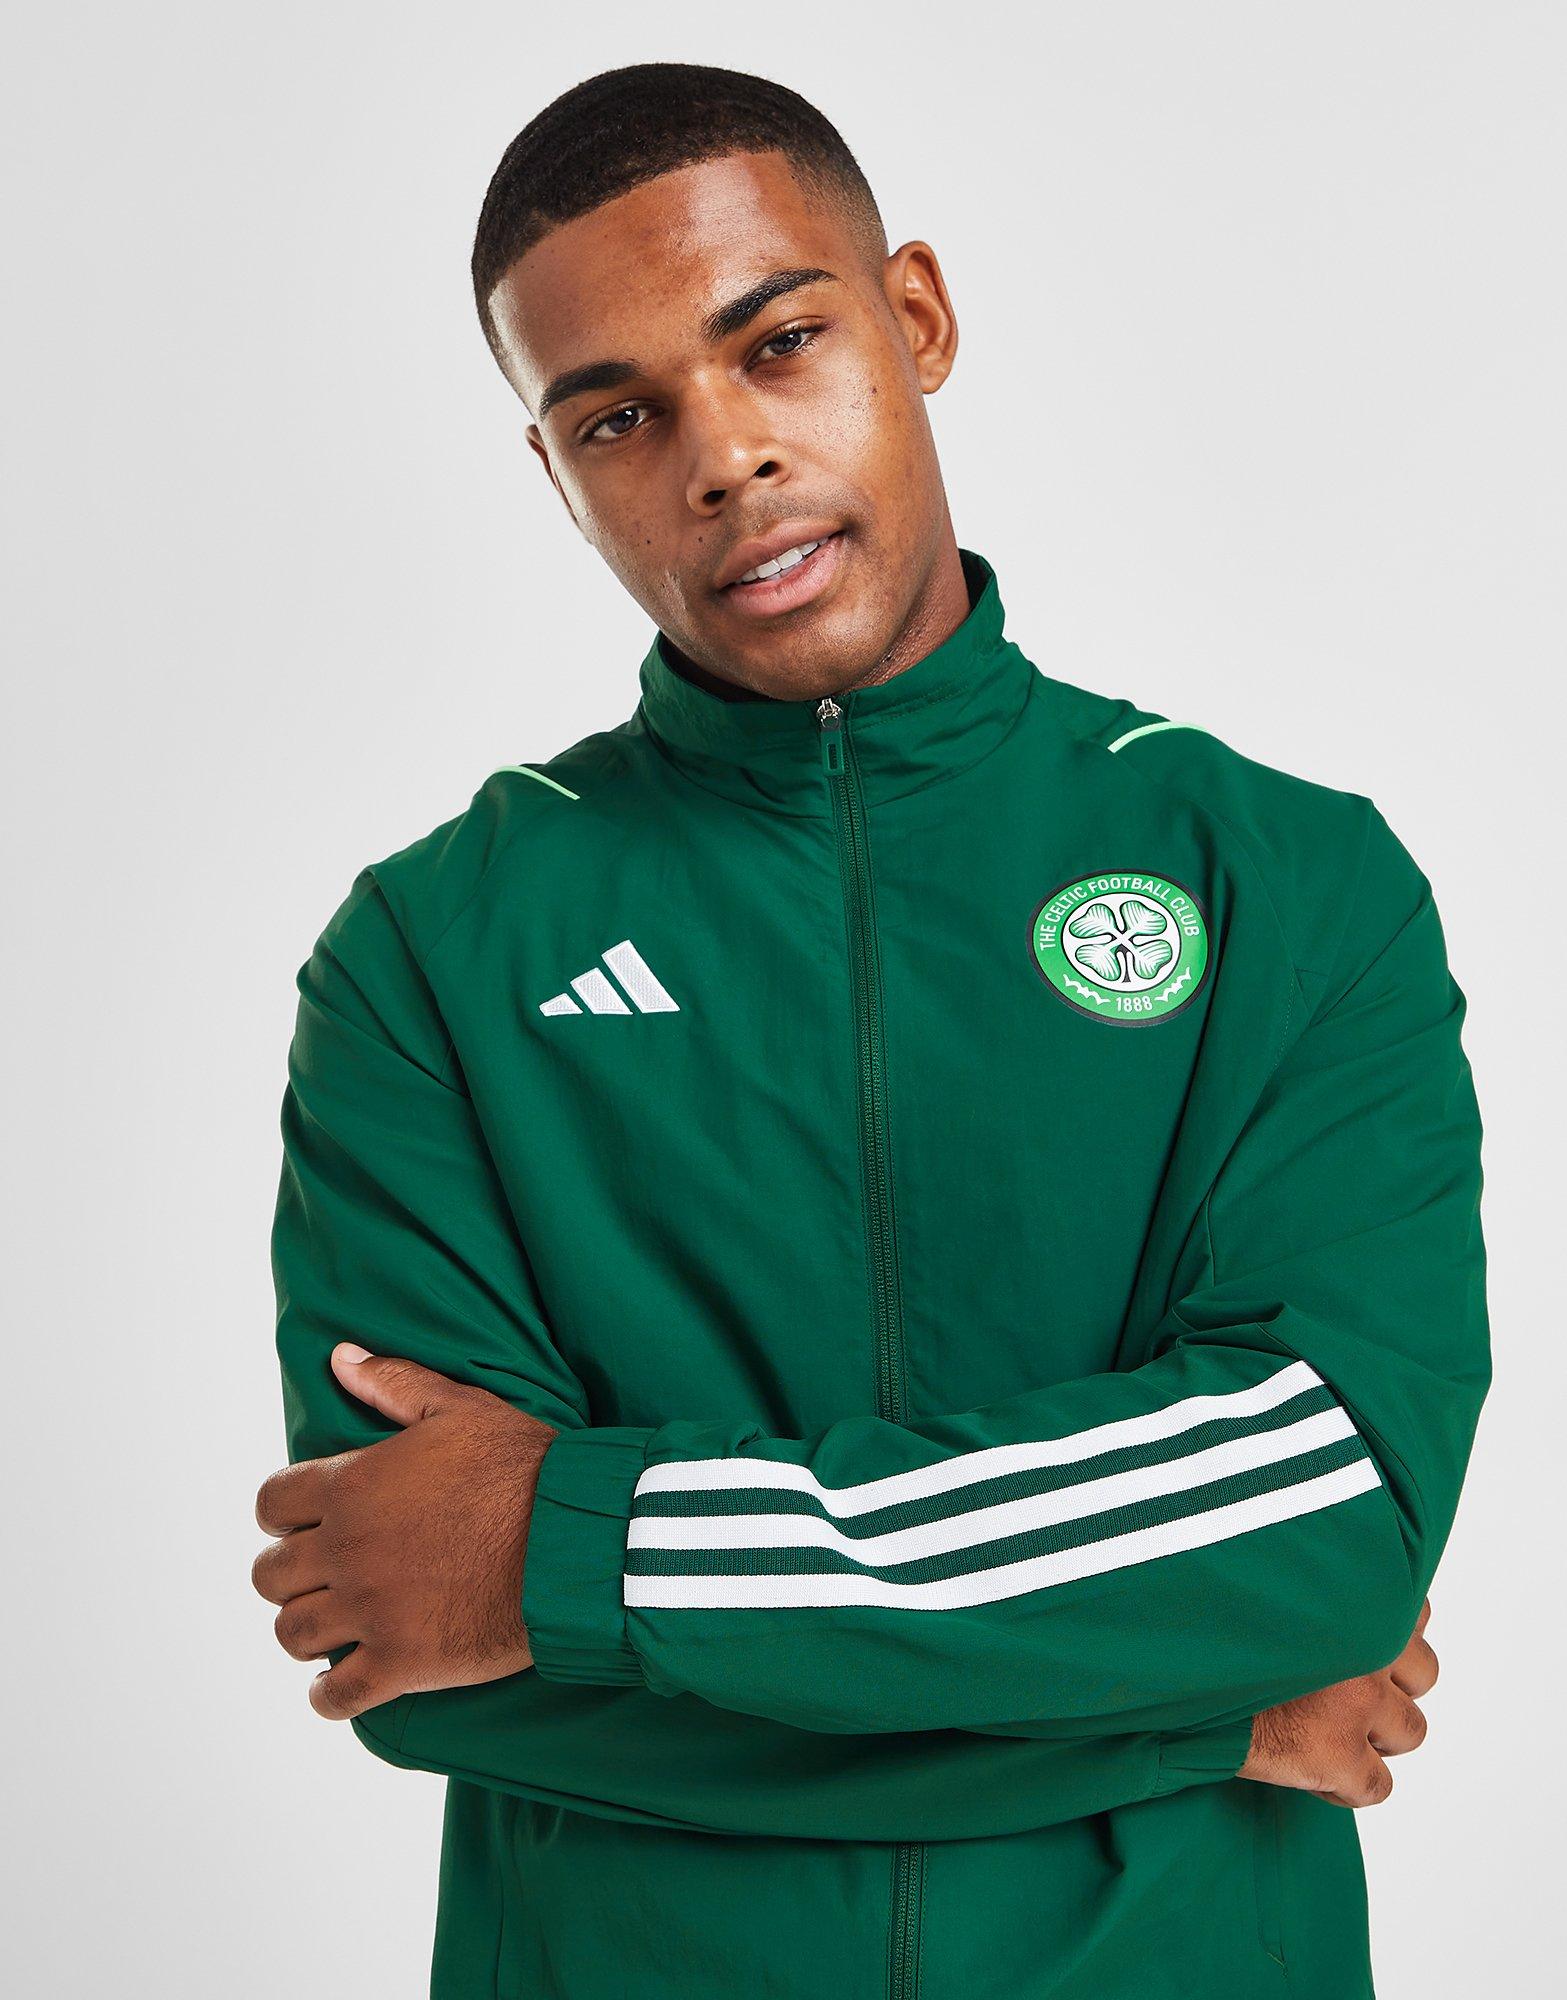 Adidas Football - Away Kit - Celtic - JD Sports Global